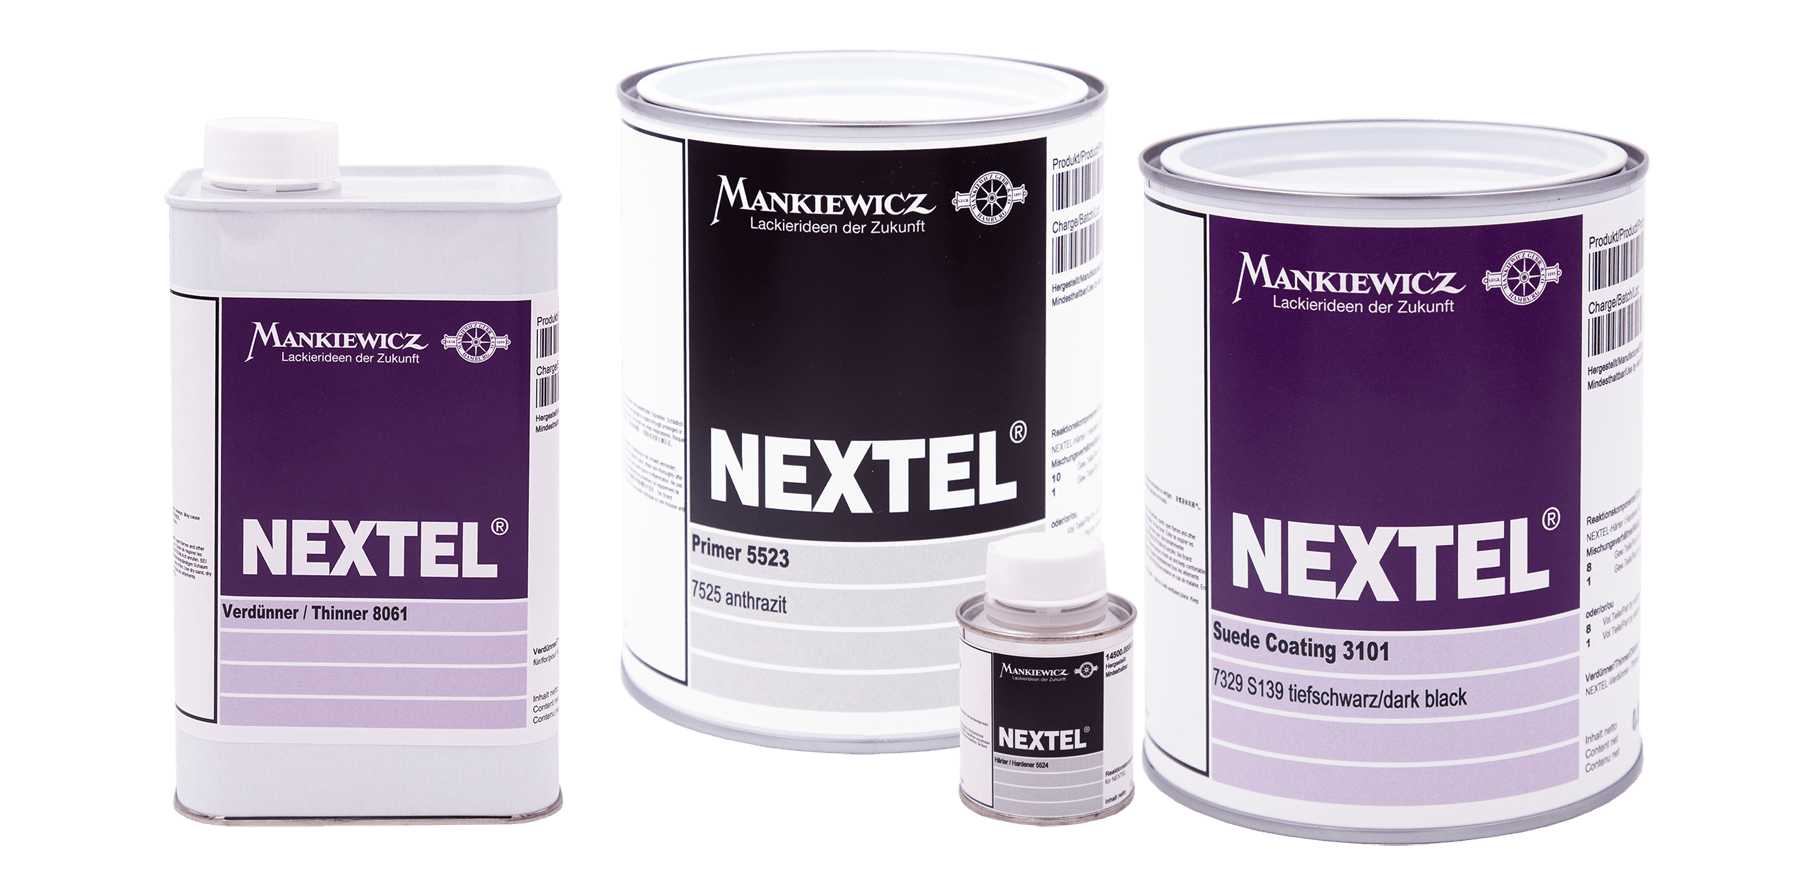 Original Nextel colors from Mankiewicz